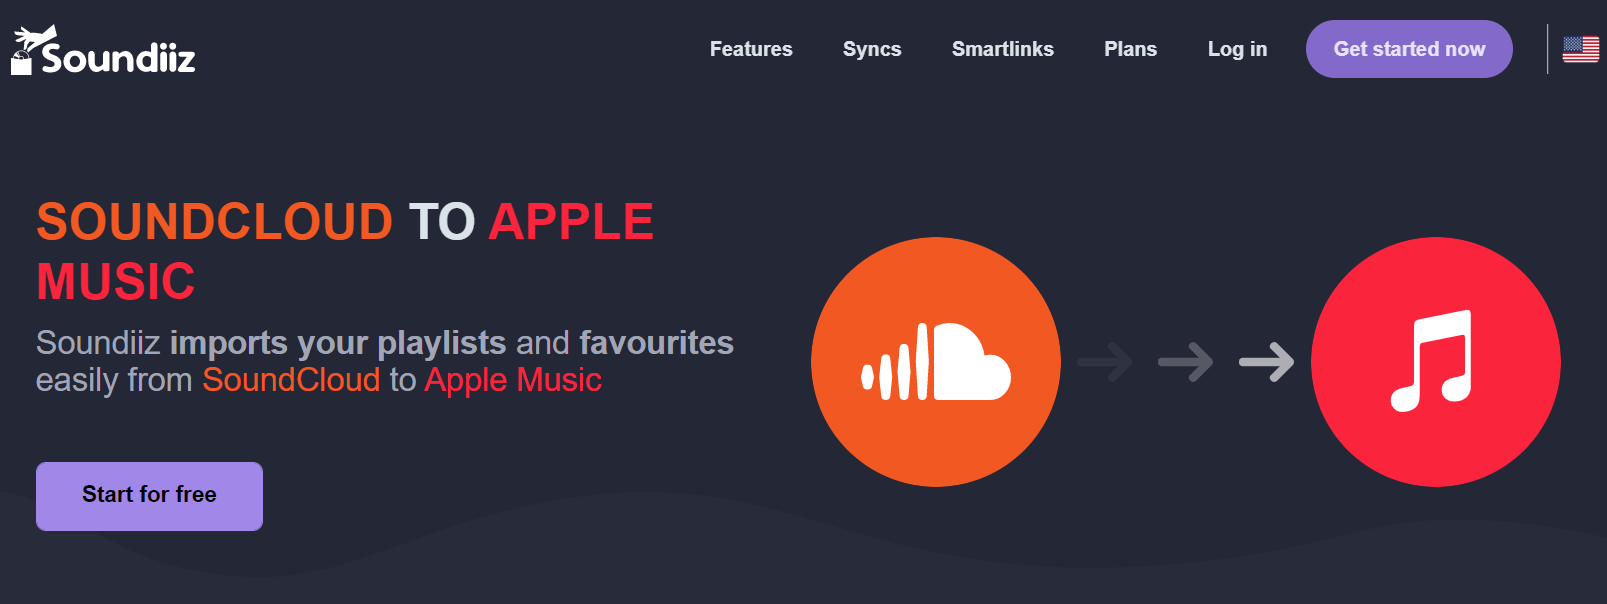 Soundiiz Soundcloud para Apple Music